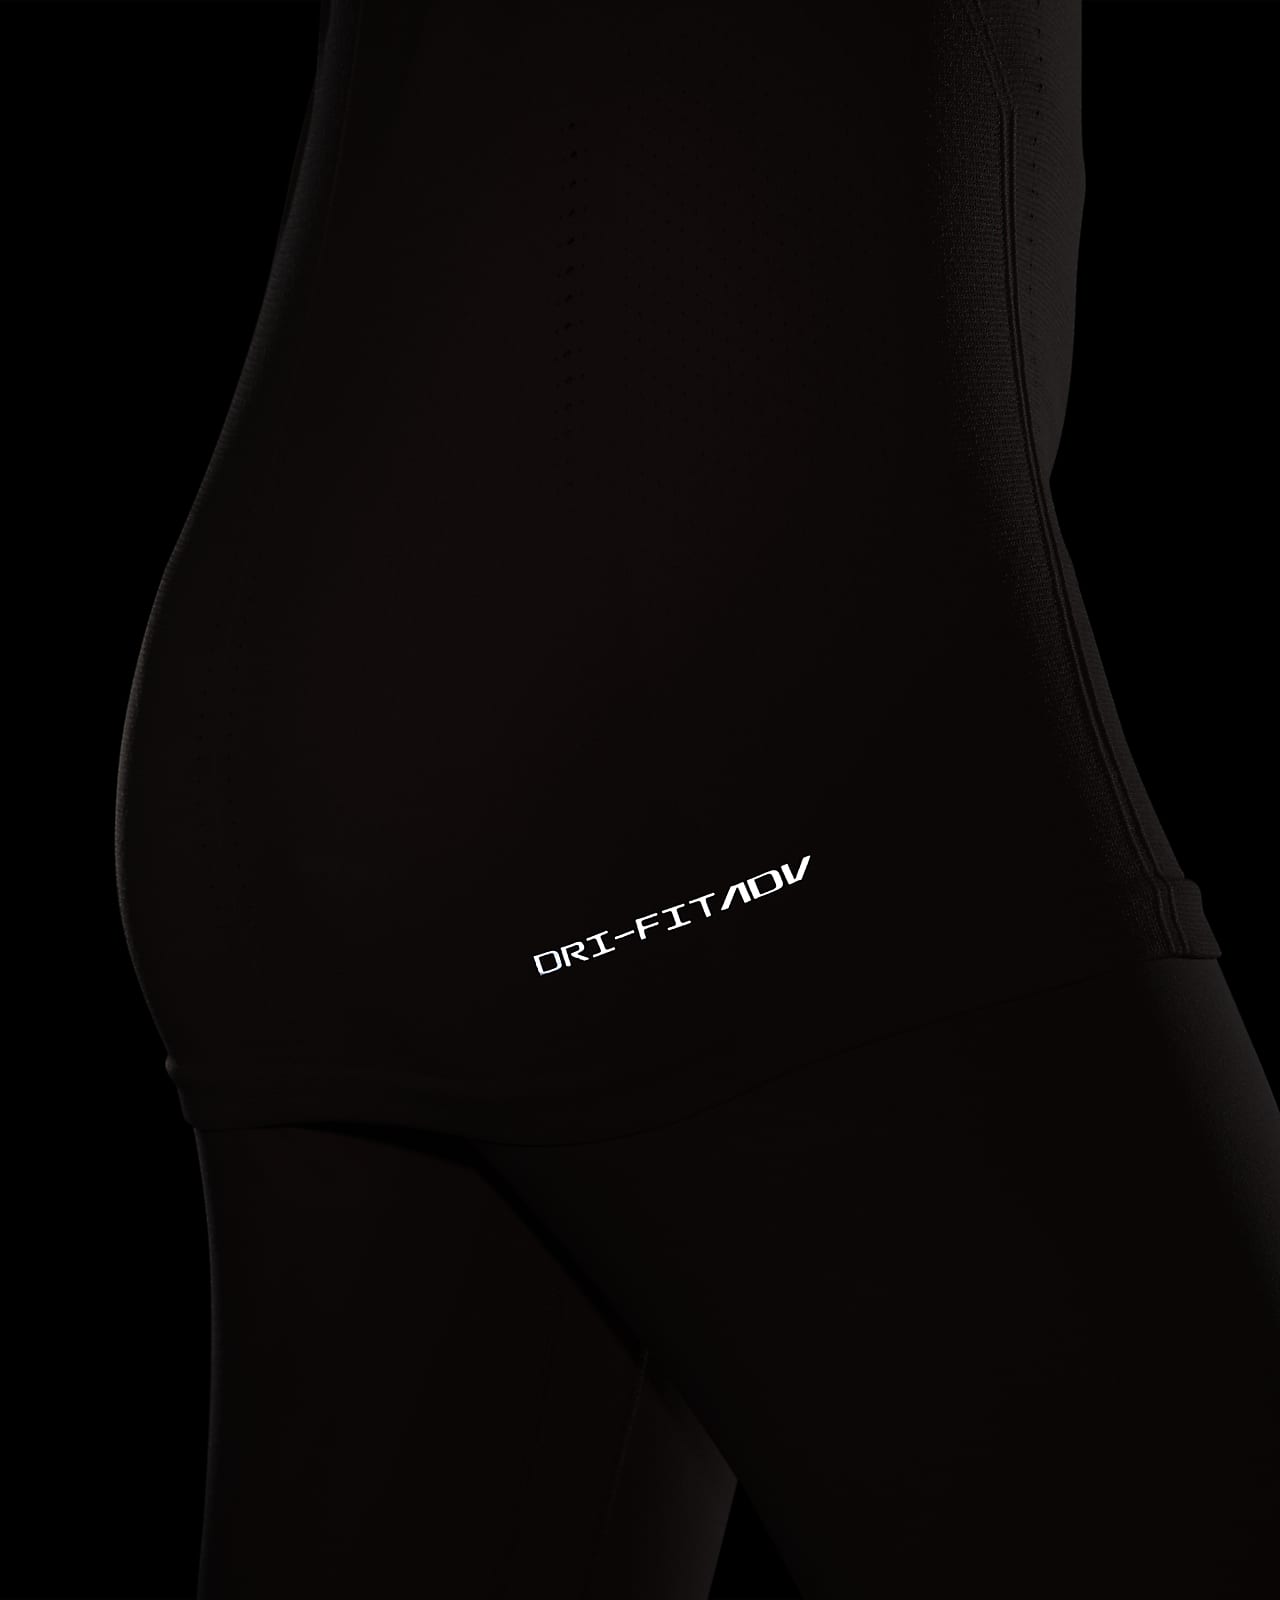 Nike Dri-FIT ADV Aura Women's Slim-Fit Short-Sleeve Top. Nike.com